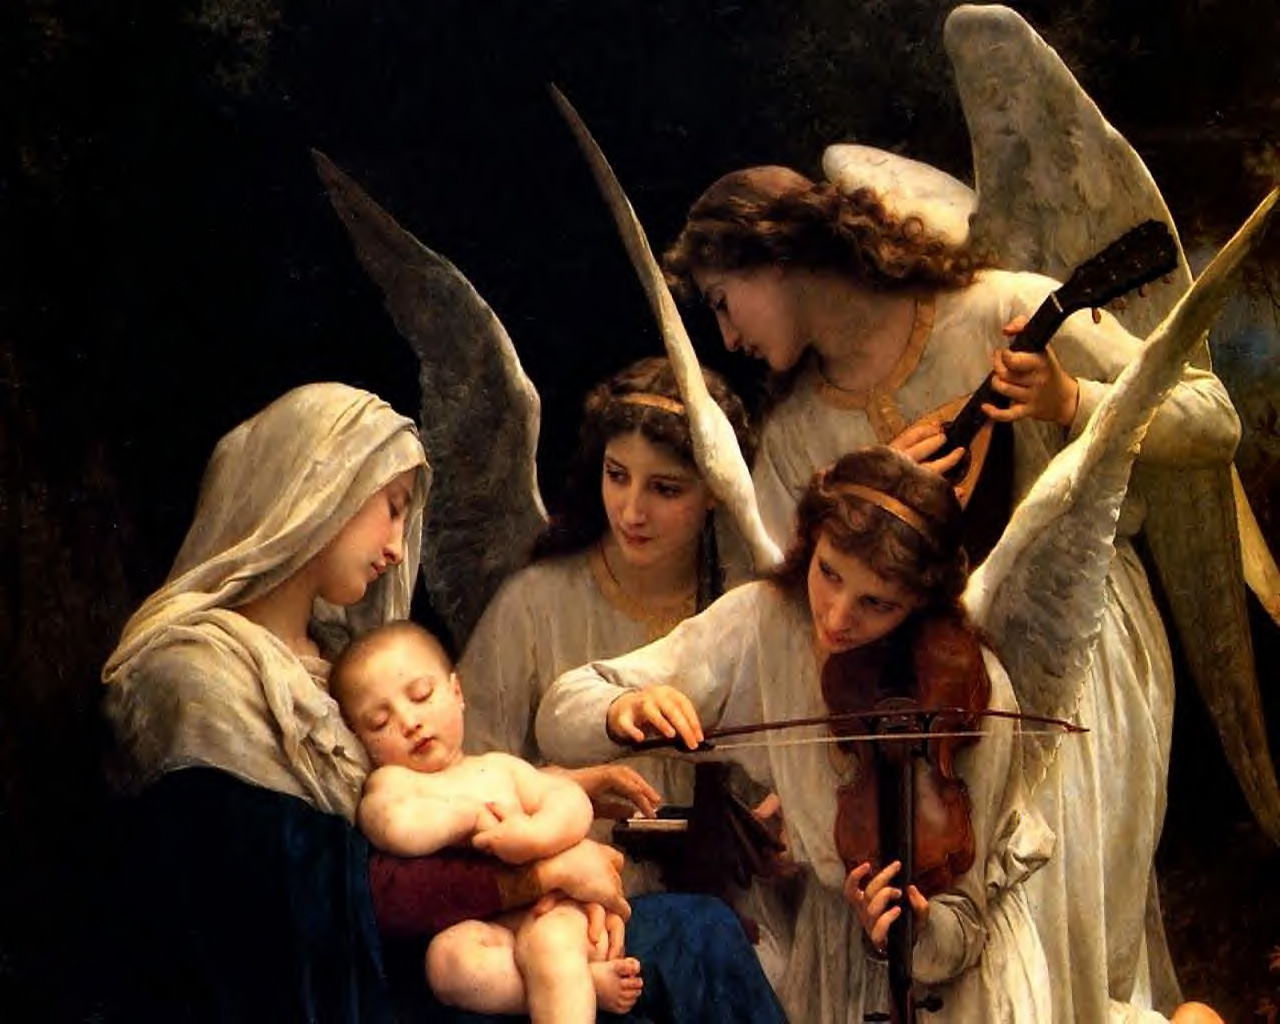 Maternity_of_the_Blessed_Virgin_Mary_October_11thB.jpg - 280,82 kB